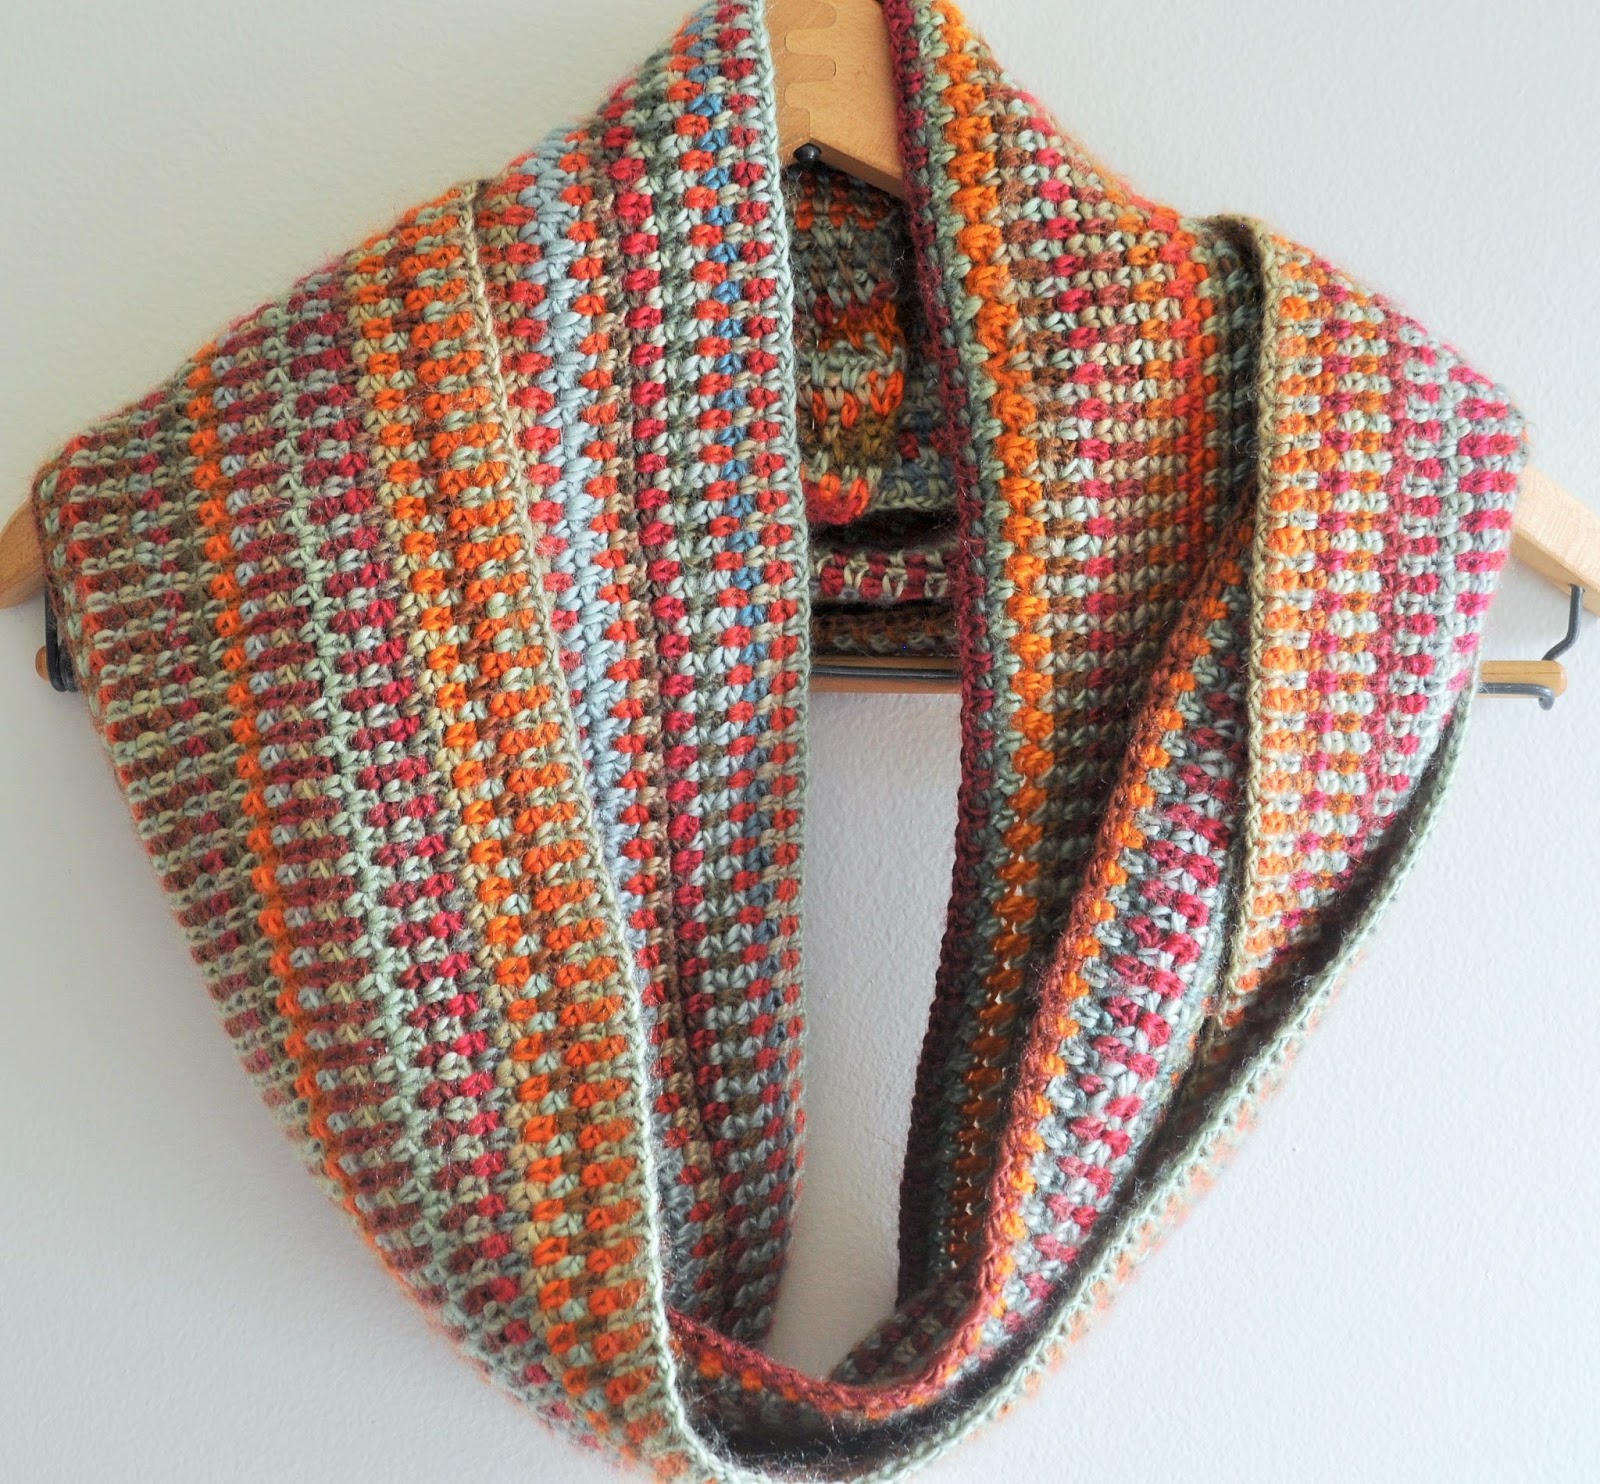 Linen Stitch Nightshade Cashmere Crocheted Scarf with Volcano Stripe